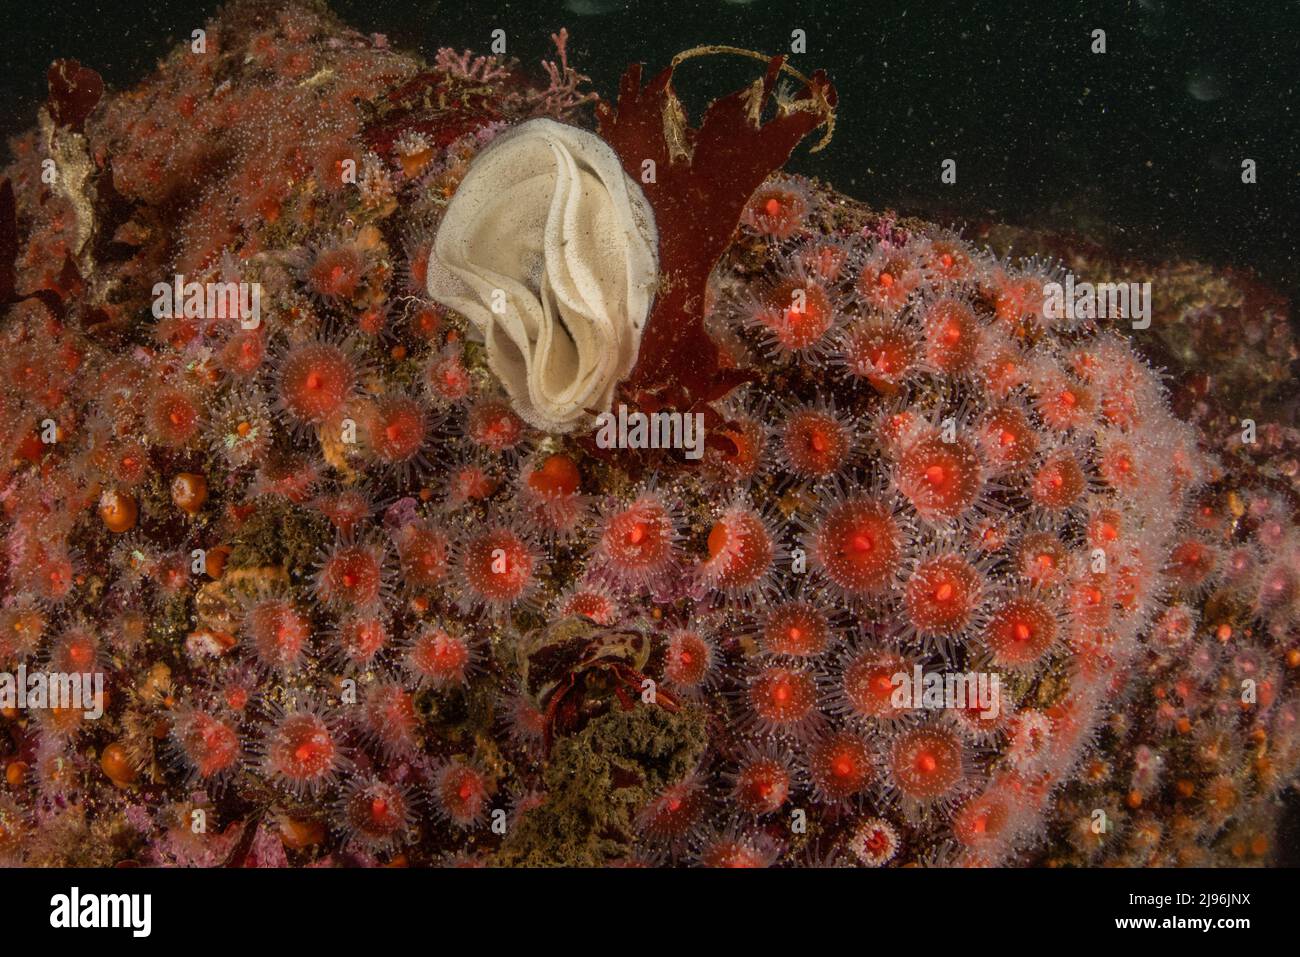 Strawberry anemones (Corynactis californica) and a spiralin nudibranch egg case on the ocean floor in Monterey Bay, California. Stock Photo